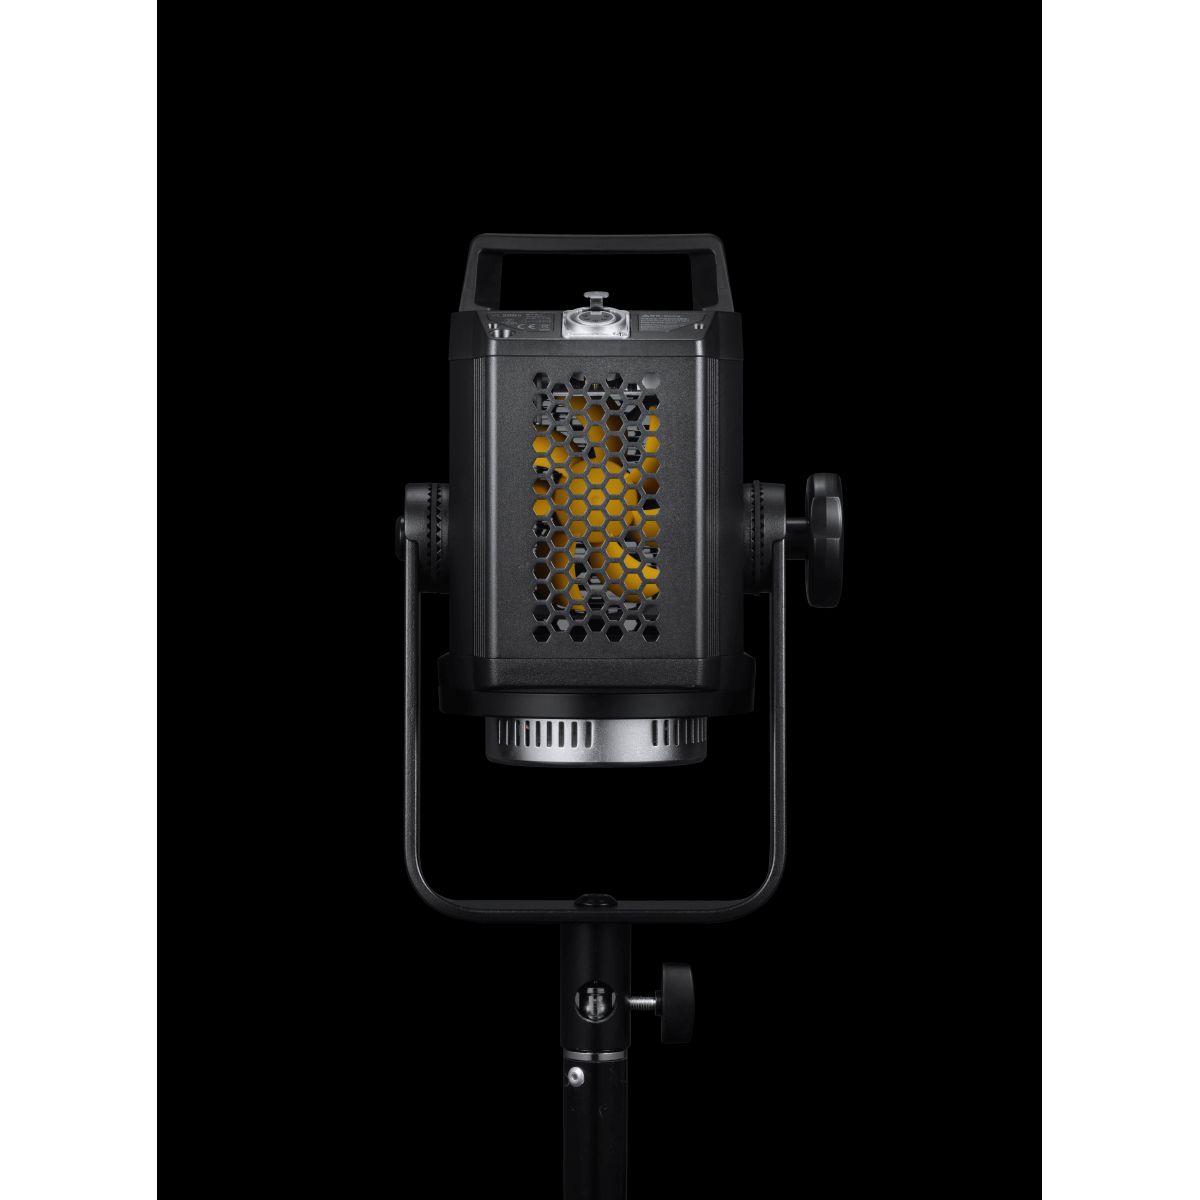 Godox VL 150 II LED Leuchte